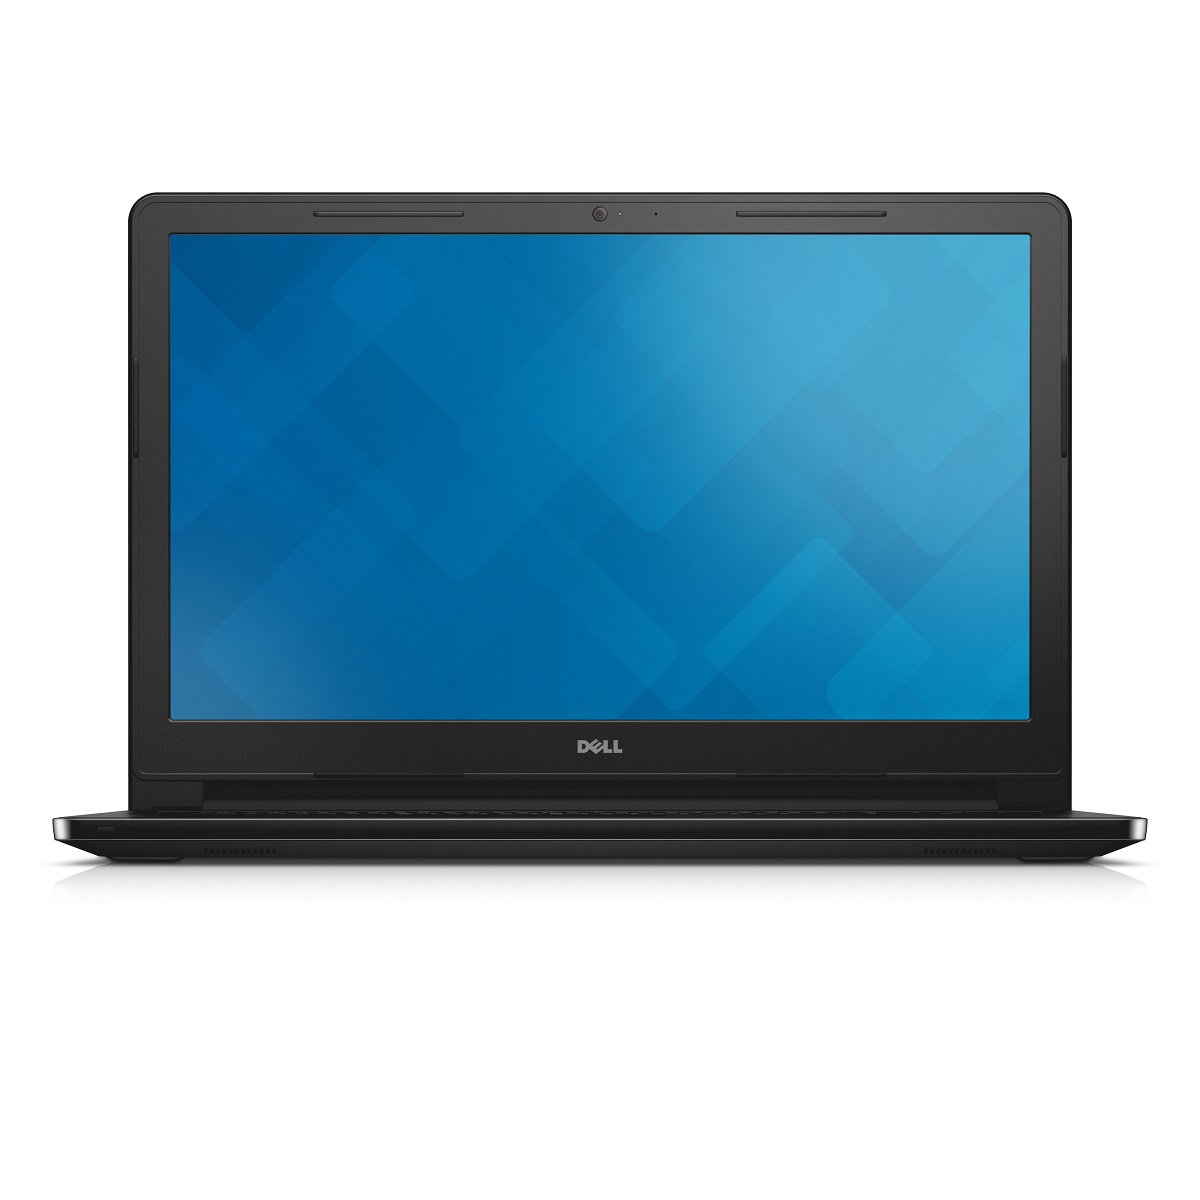 Notebook Dell Inspiron 3567 15.6 Full HD Intel Core i5-7200U R5 M430-2GB RAM 8GB HDD 1TB Windows 10 Home title=Notebook Dell Inspiron 3567 15.6 Full HD Intel Core i5-7200U R5 M430-2GB RAM 8GB HDD 1TB Windows 10 Home